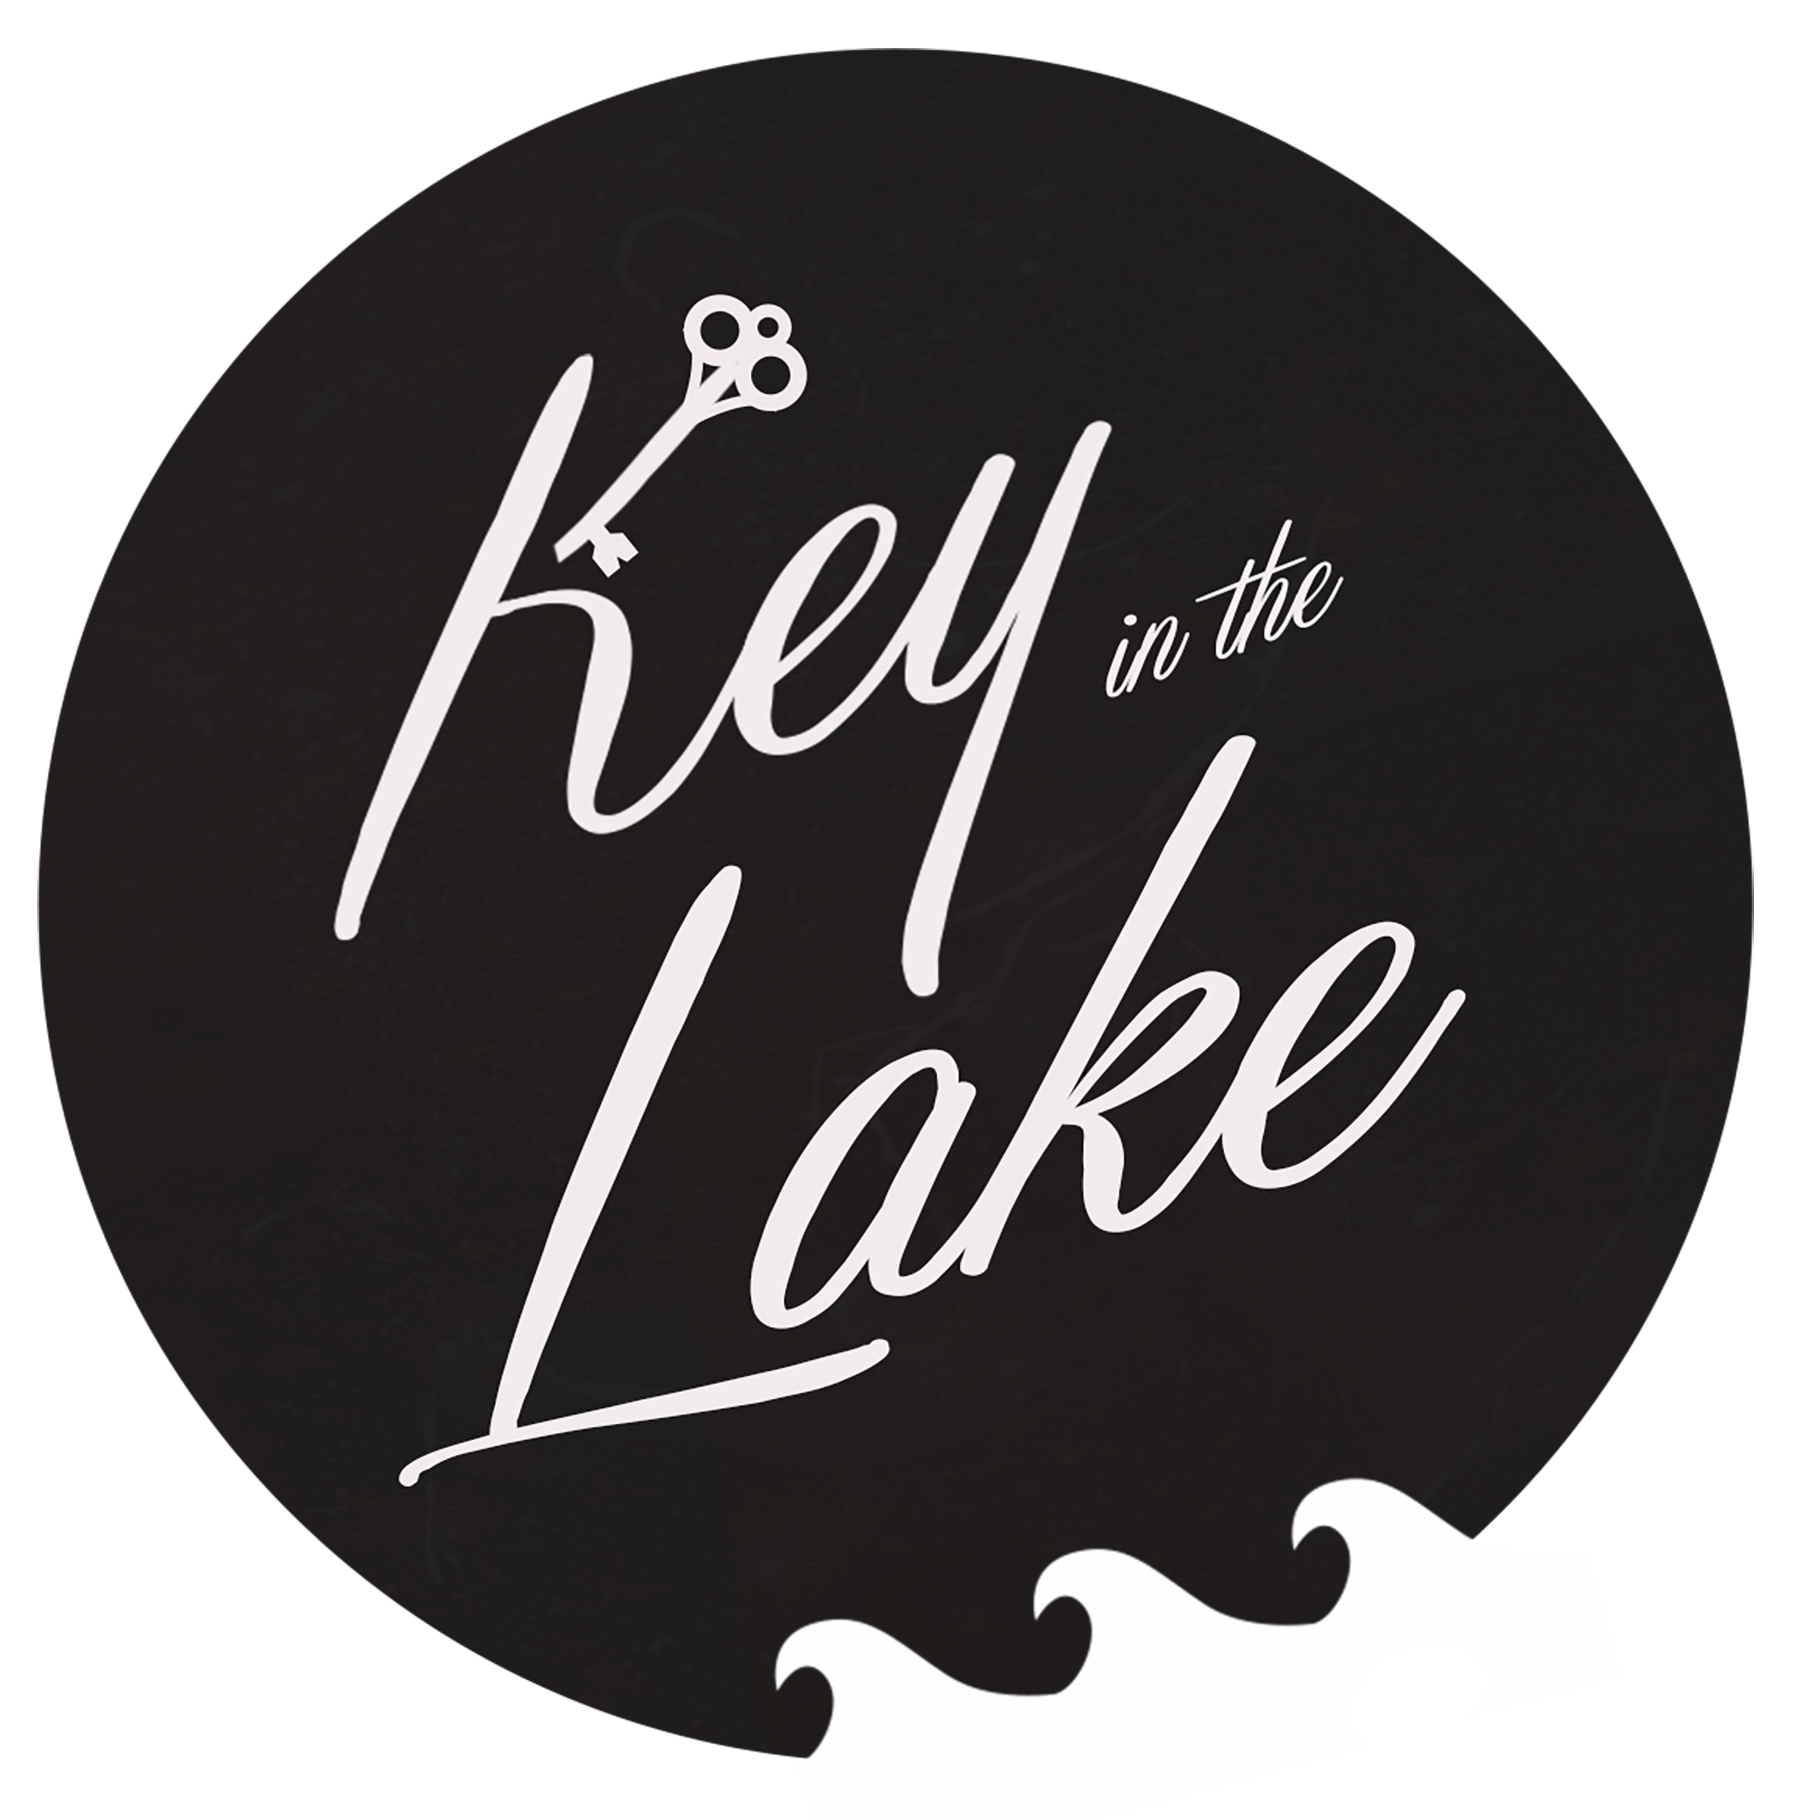 KEY IN THE LAKE